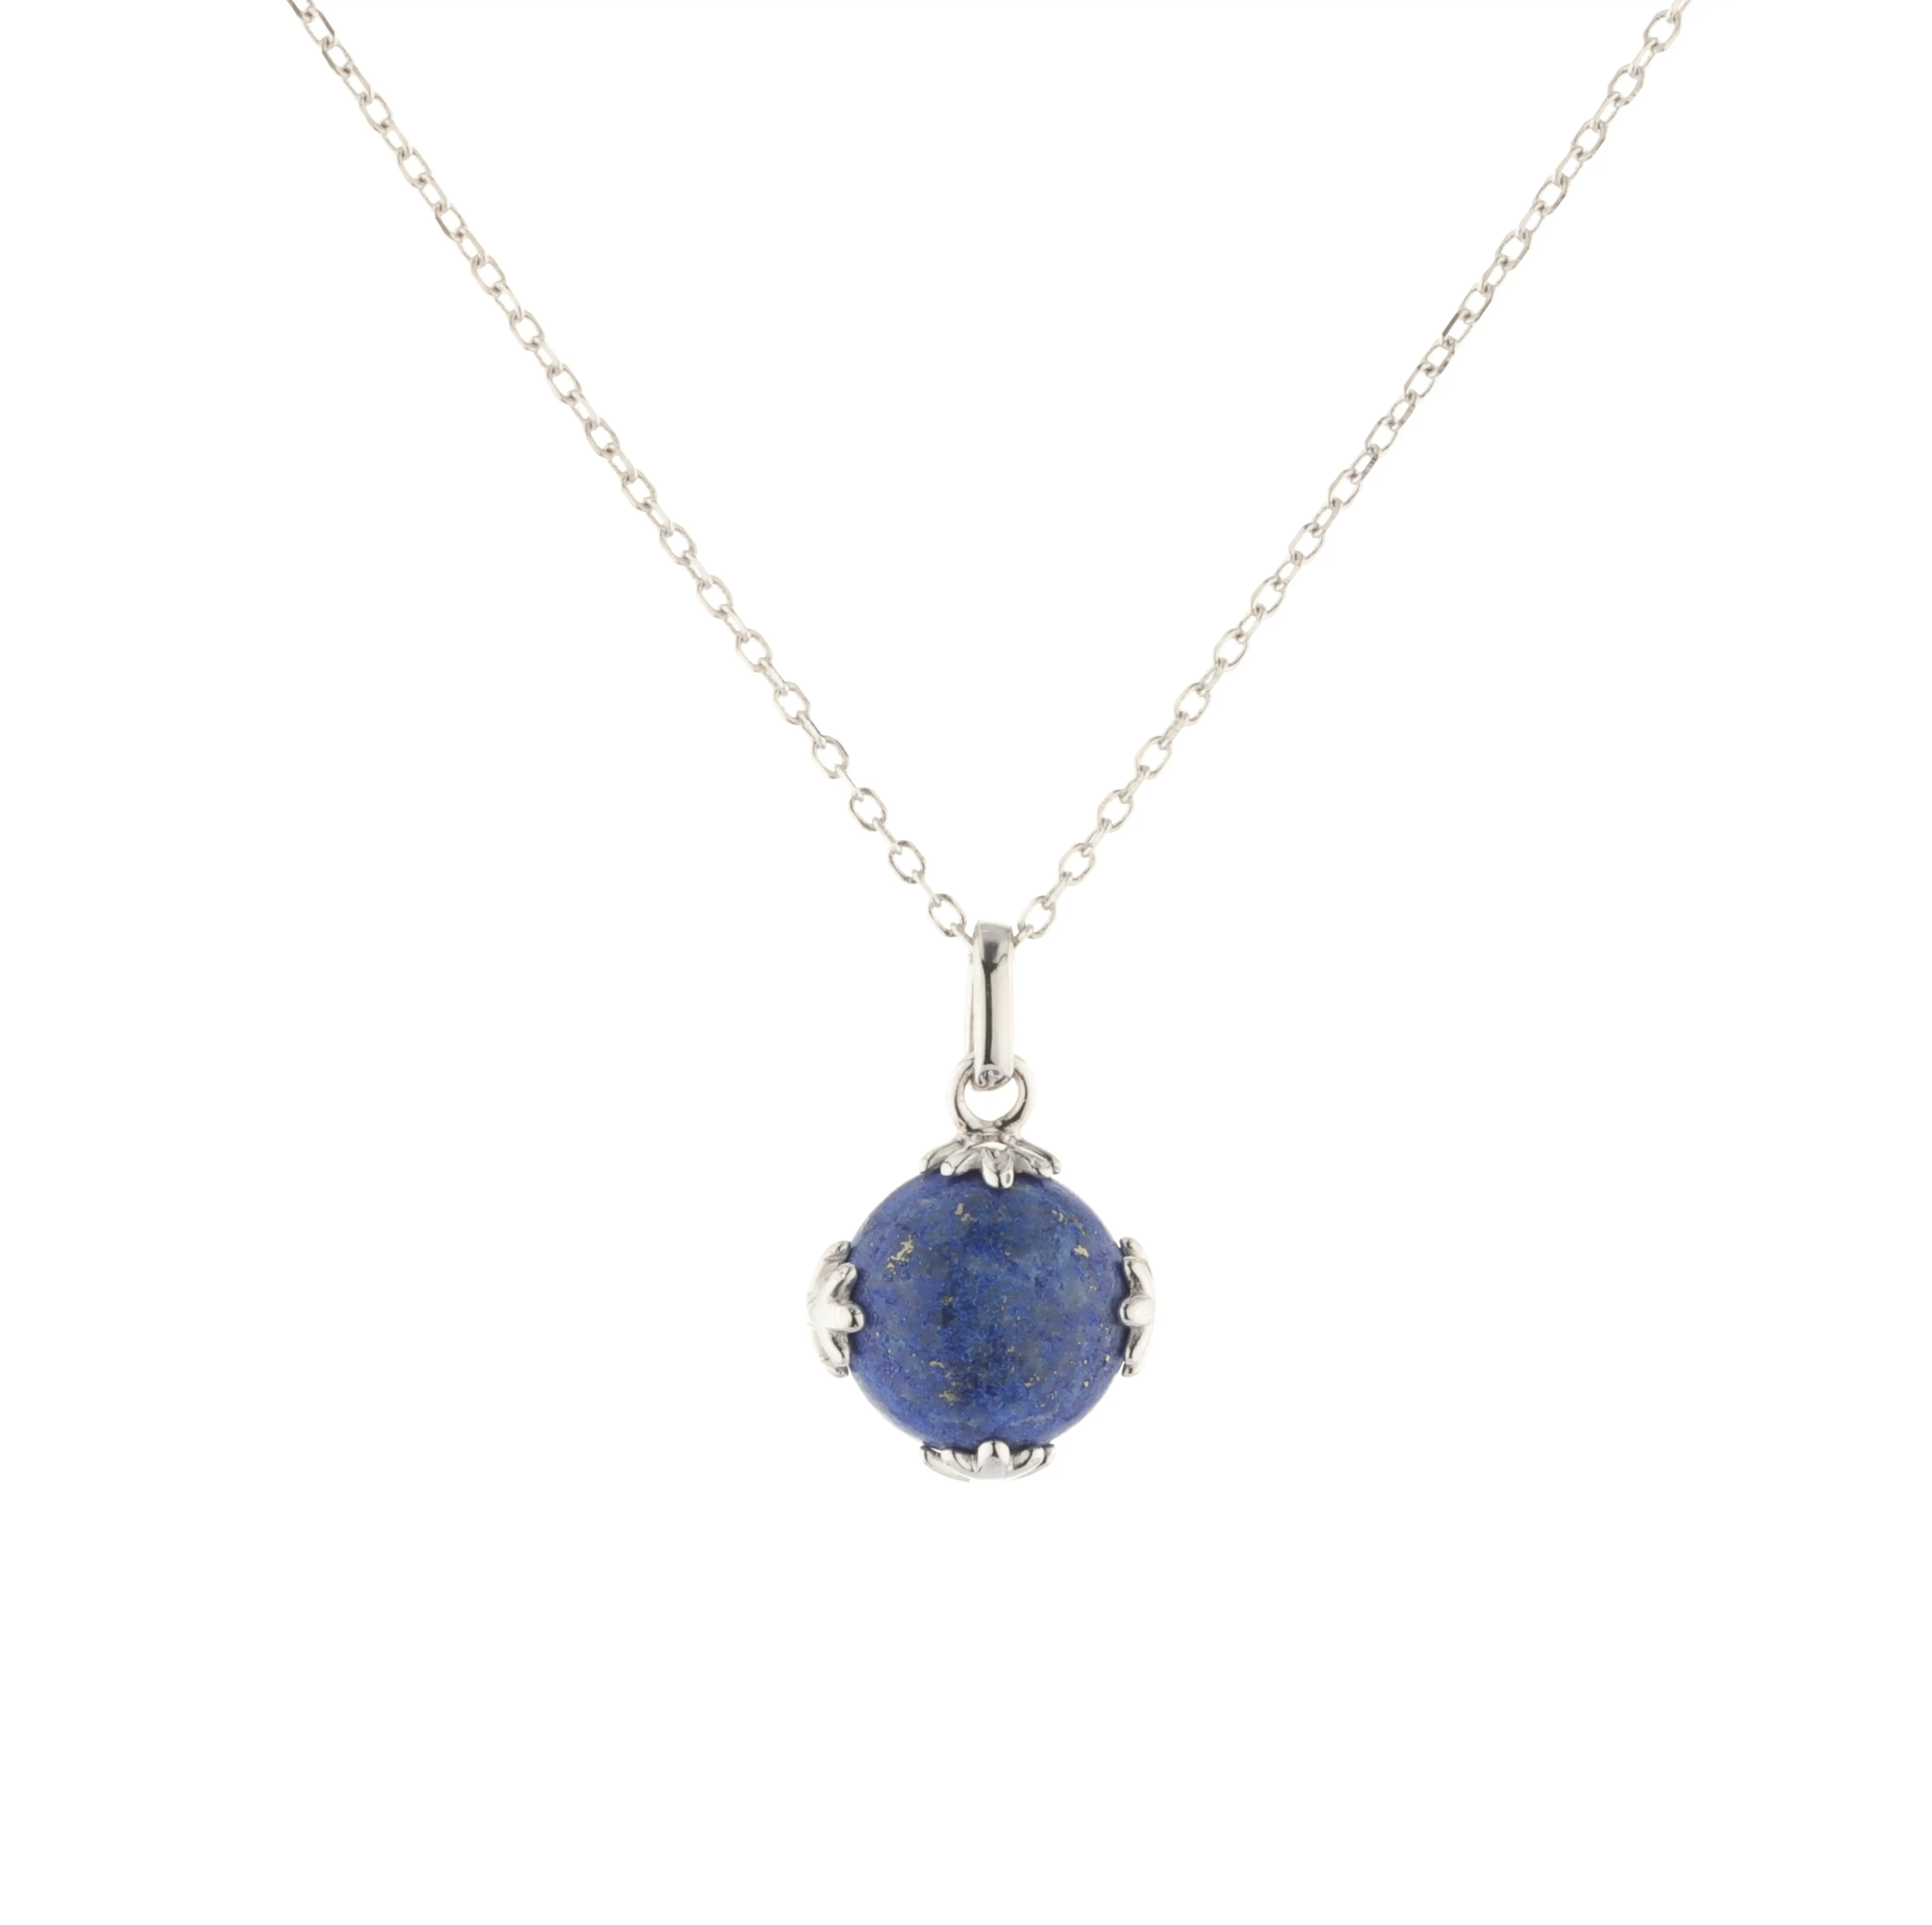 925 Sterling Silver Jewelry Snowflake Gemstone Necklace Lapis Lazuli Pendant gemstone Pendant Necklace For Women